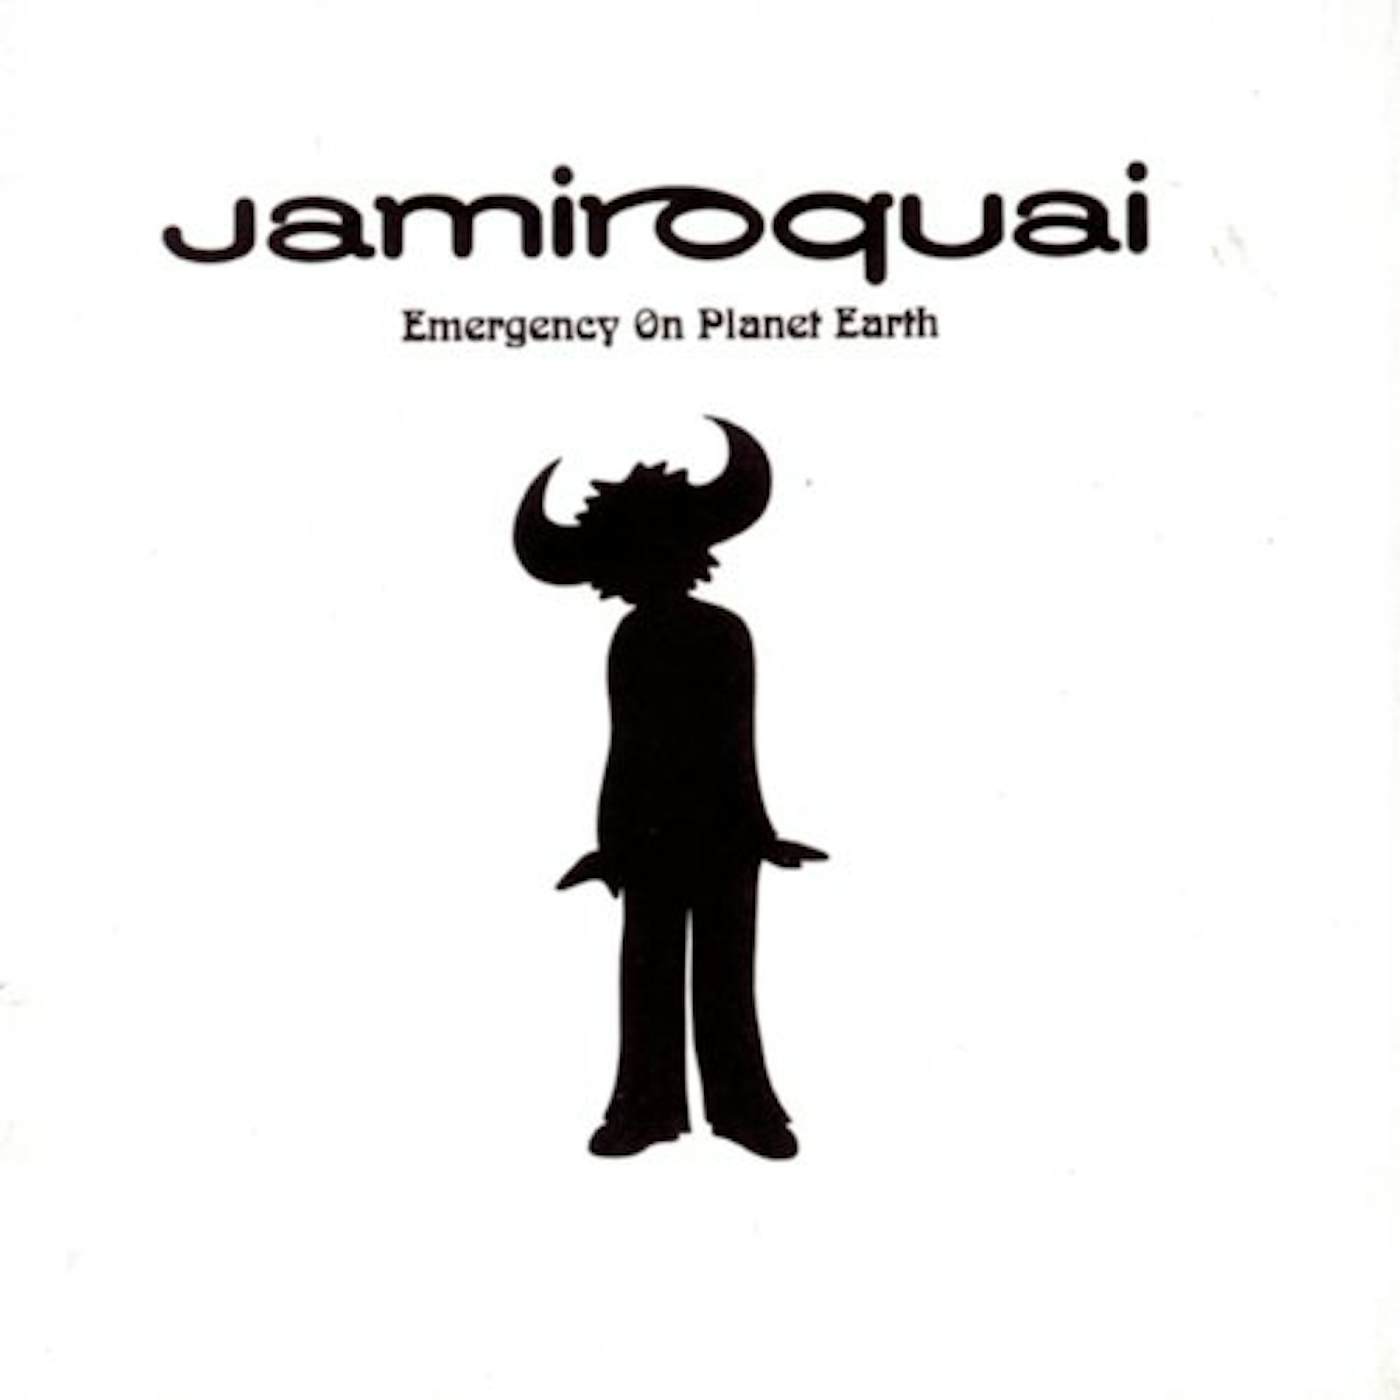 Jamiroquai Emergency On Planet Earth Vinyl Record